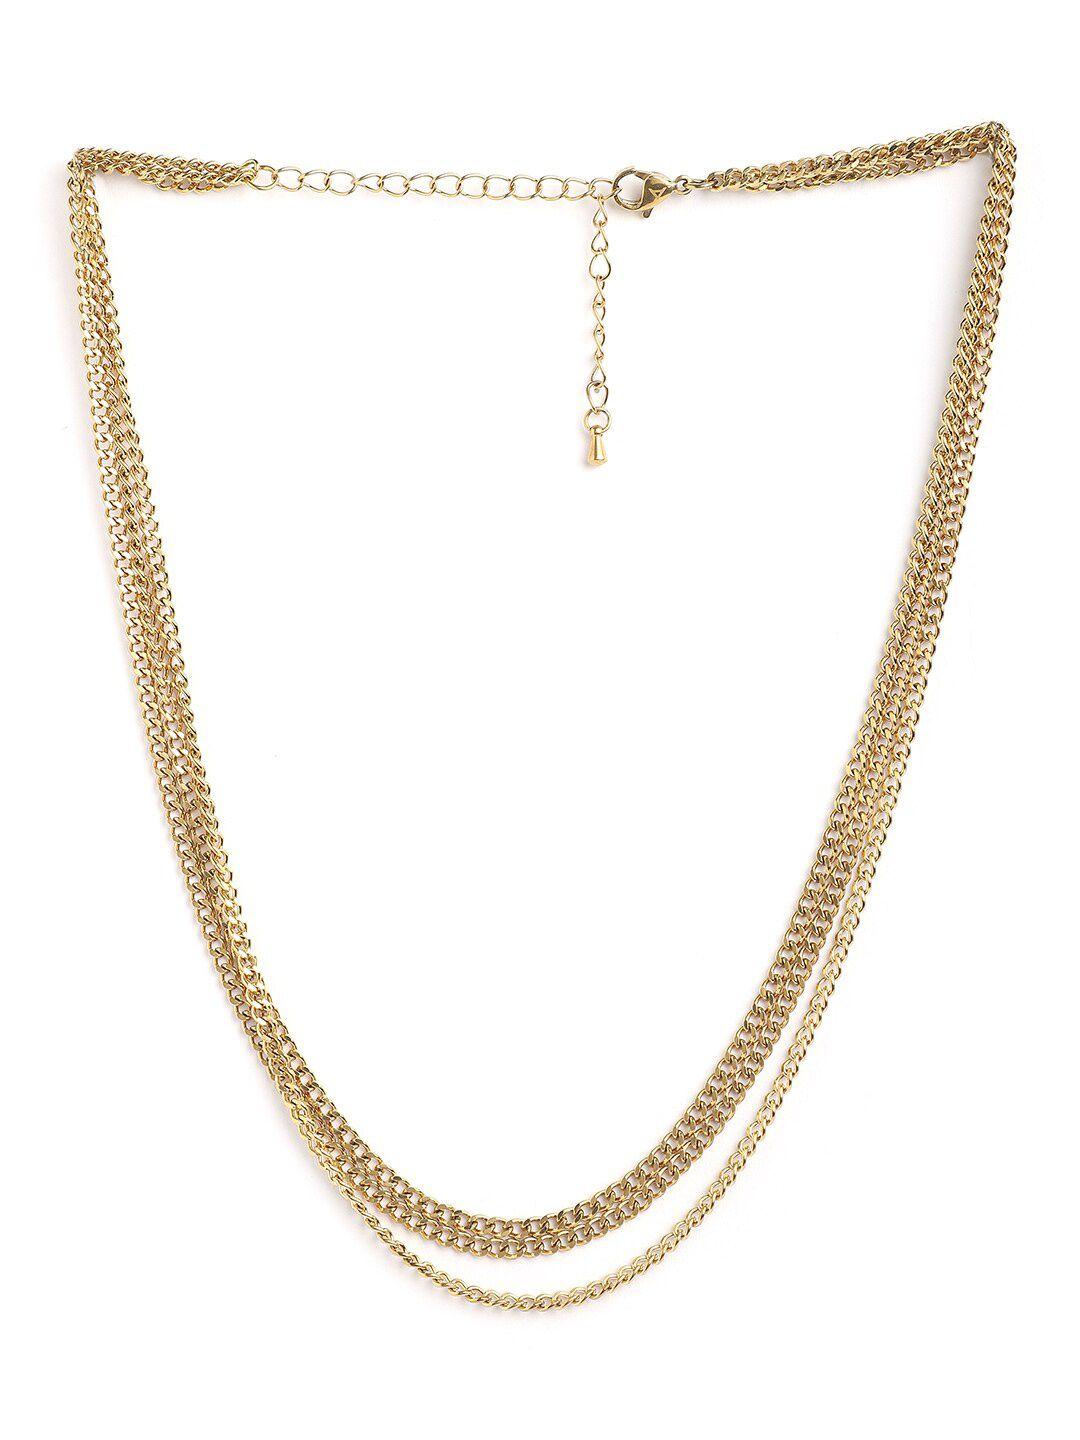 aldo women gold-toned layered chain